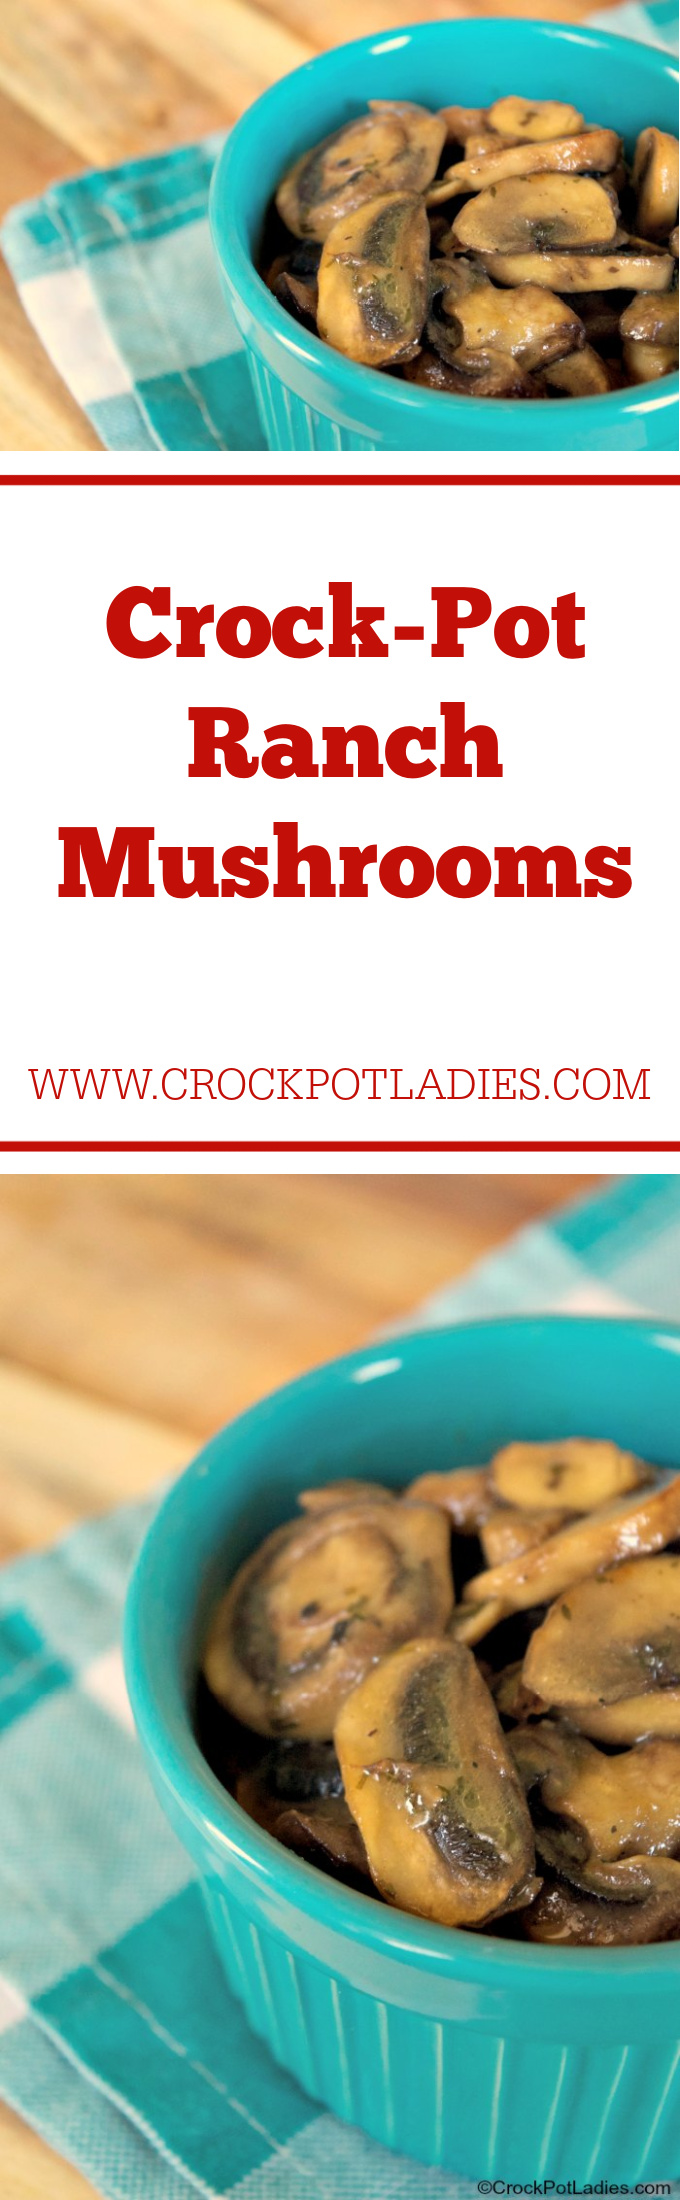 Crock-Pot Ranch Mushrooms